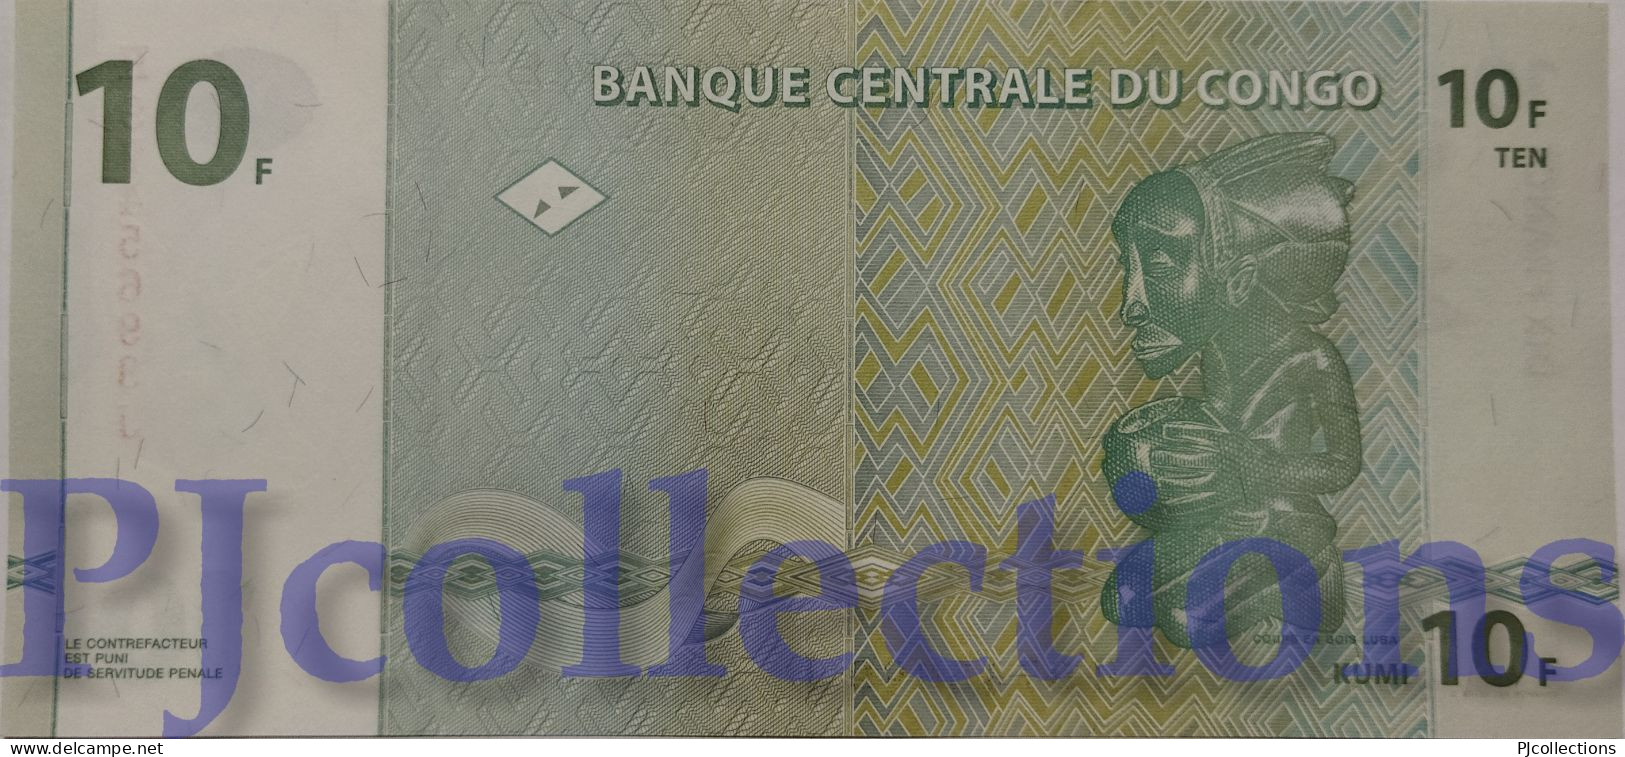 CONGO DEMOCRATIC REPUBLIC 10 FRANCS 1997 PICK 87B UNC - Democratische Republiek Congo & Zaire